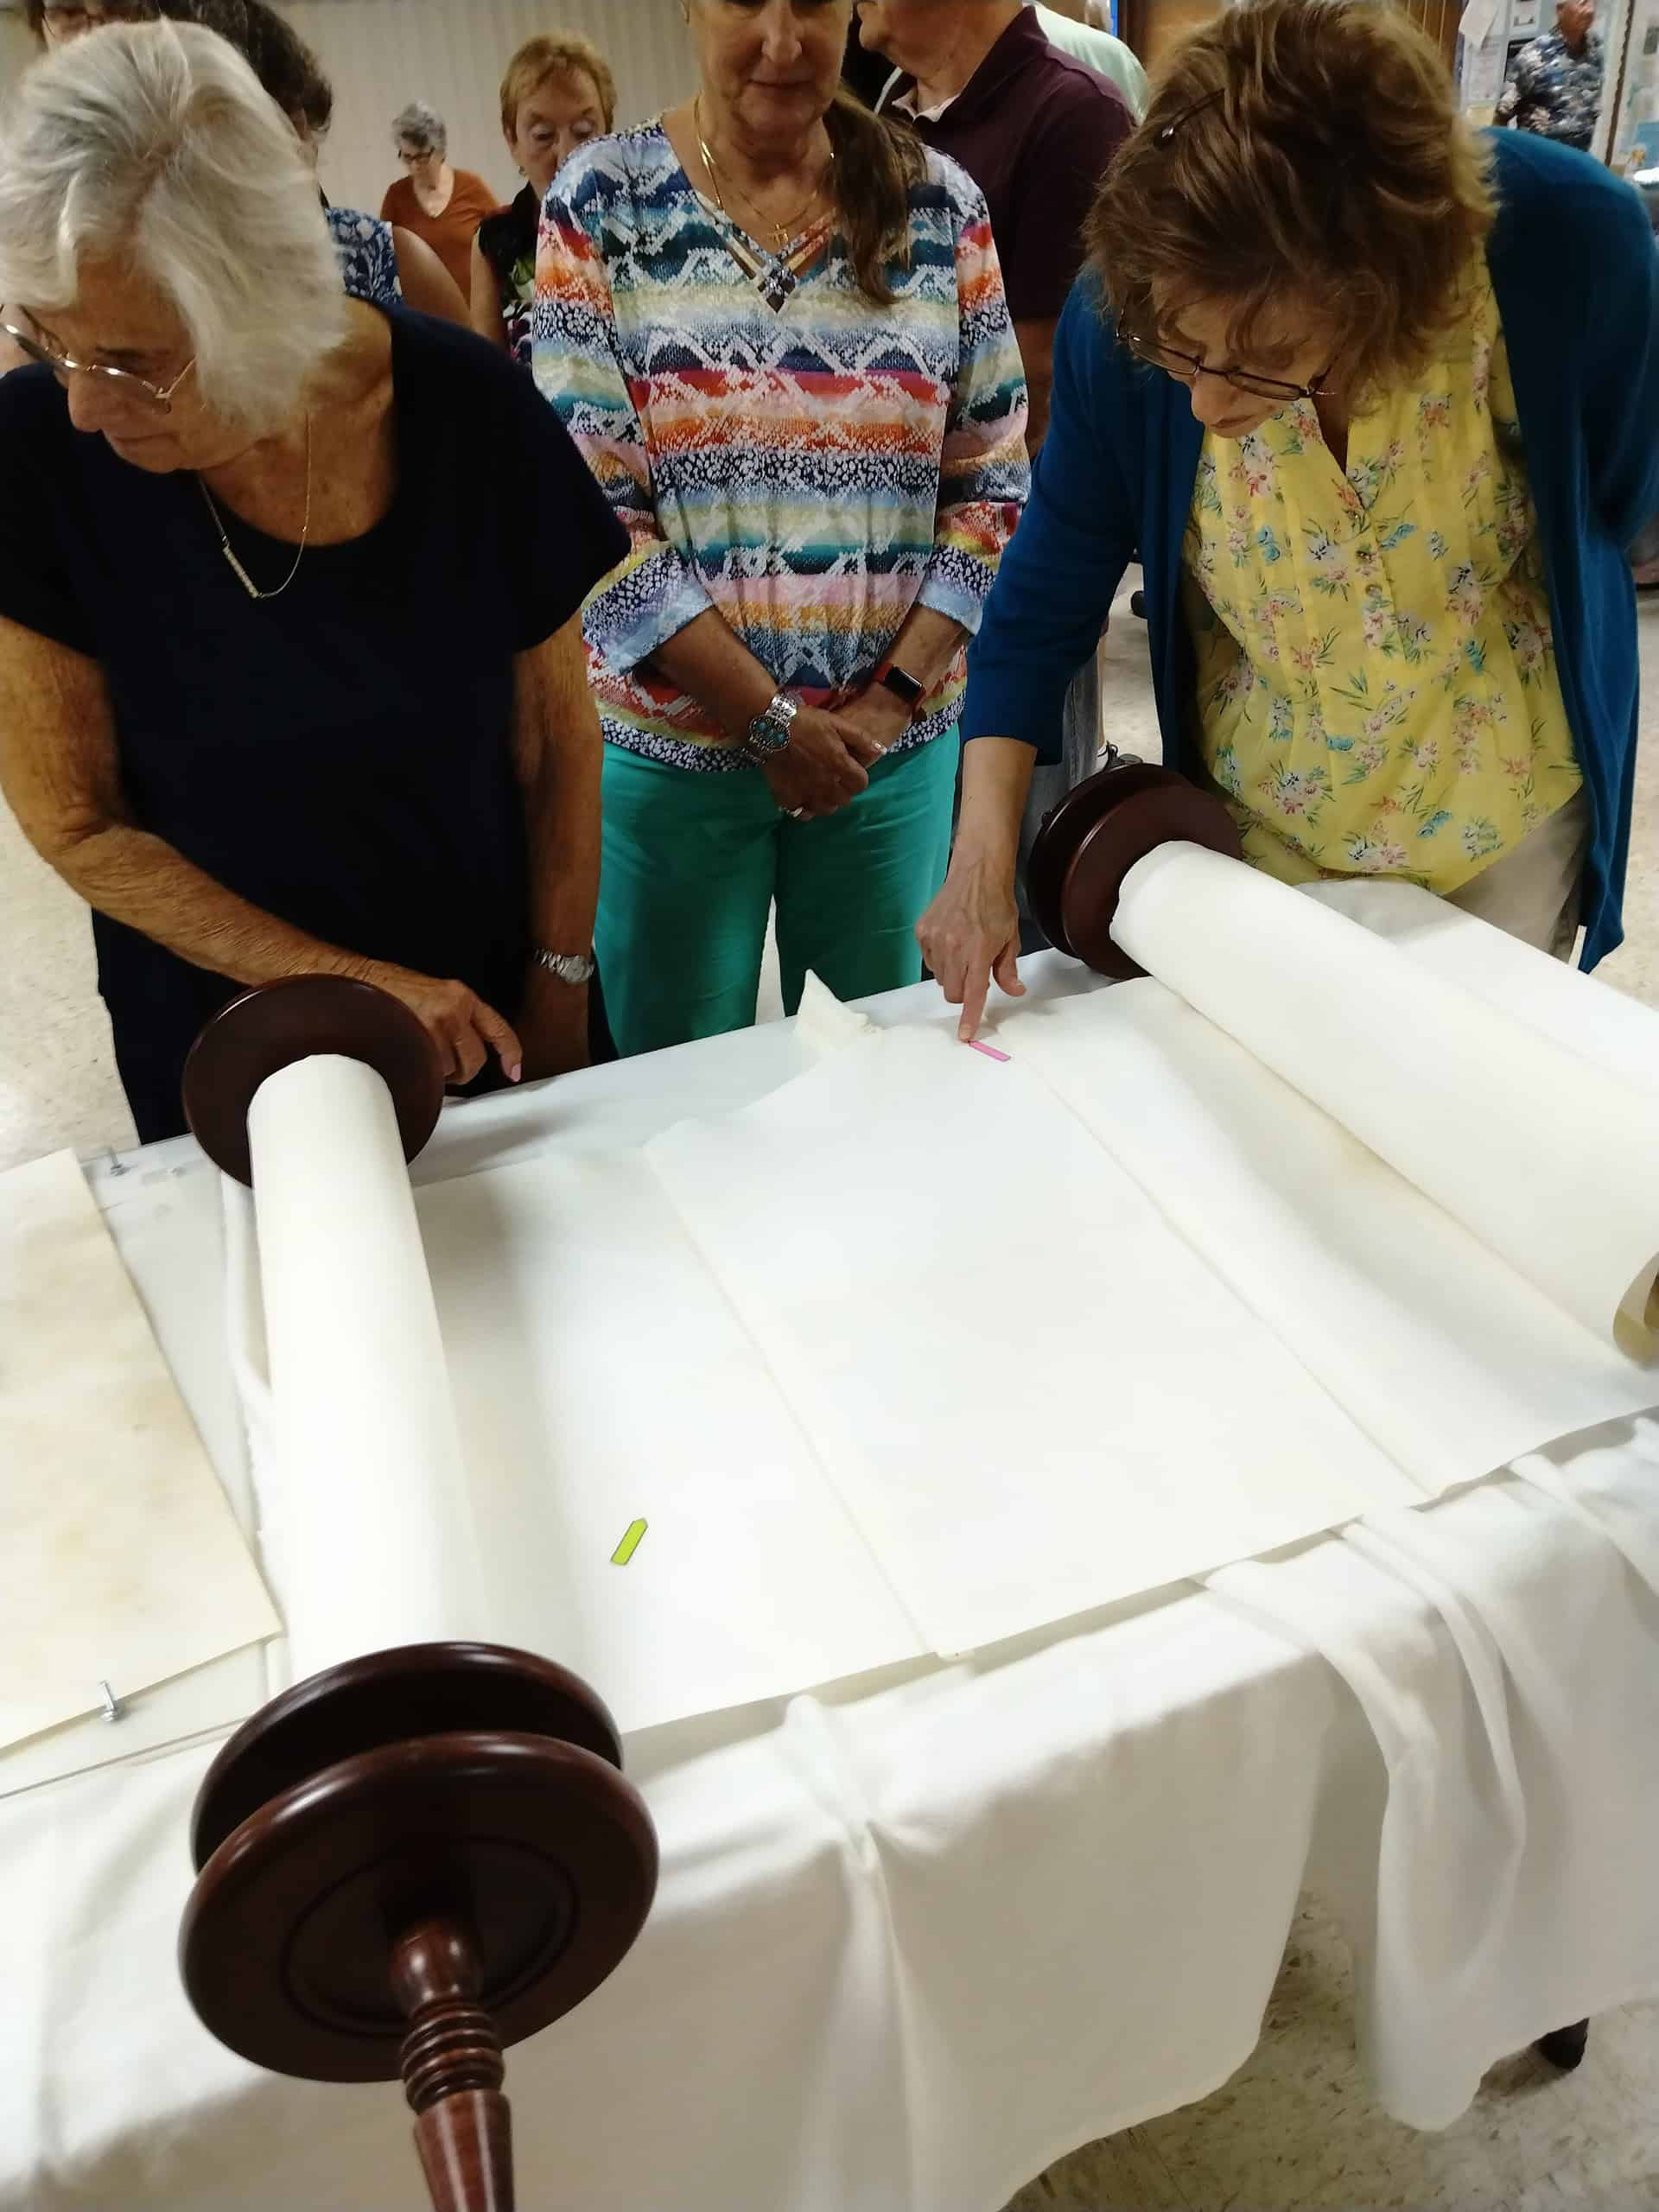 Temple Beth David members examine the Braille Torah. [Courtesy photo]